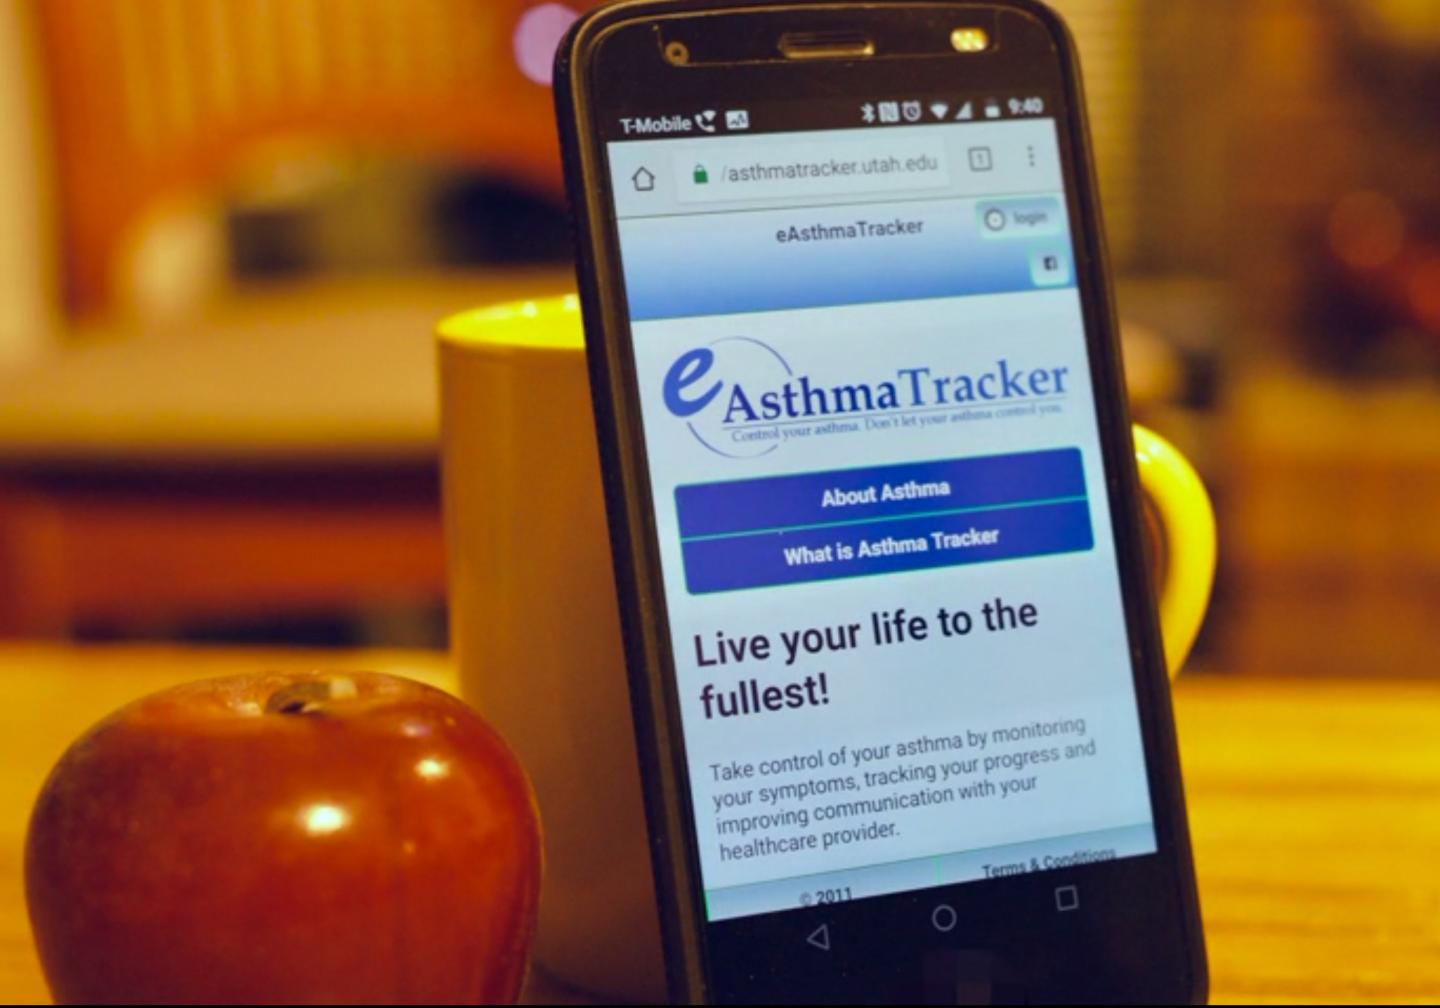 eAsthma Tracker